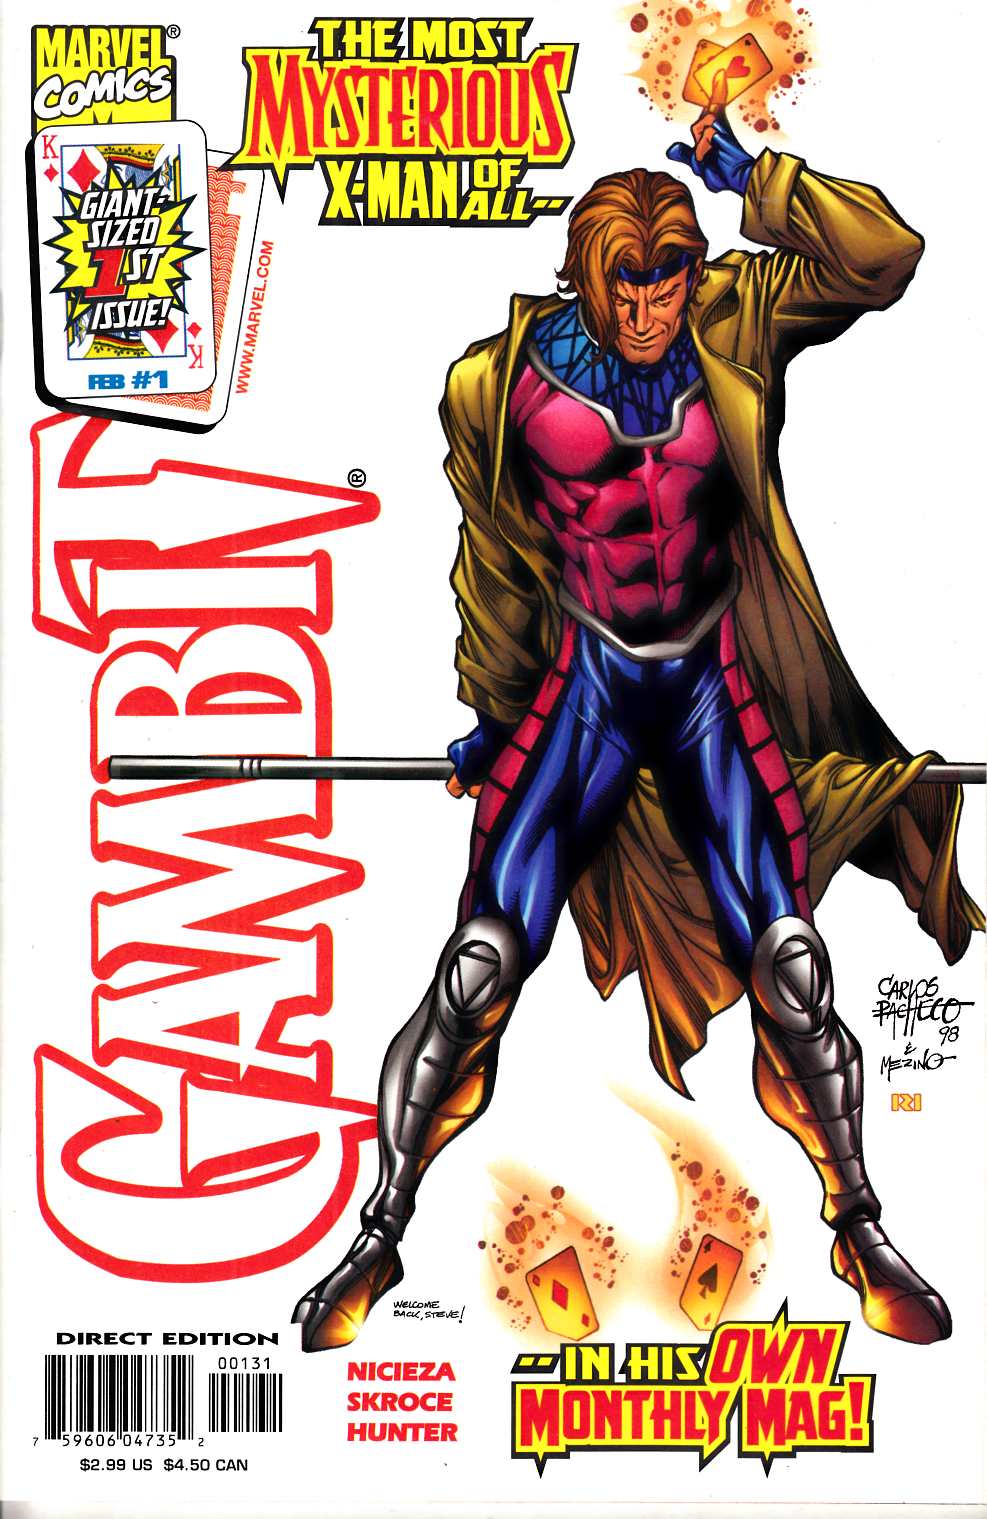 gambit comic